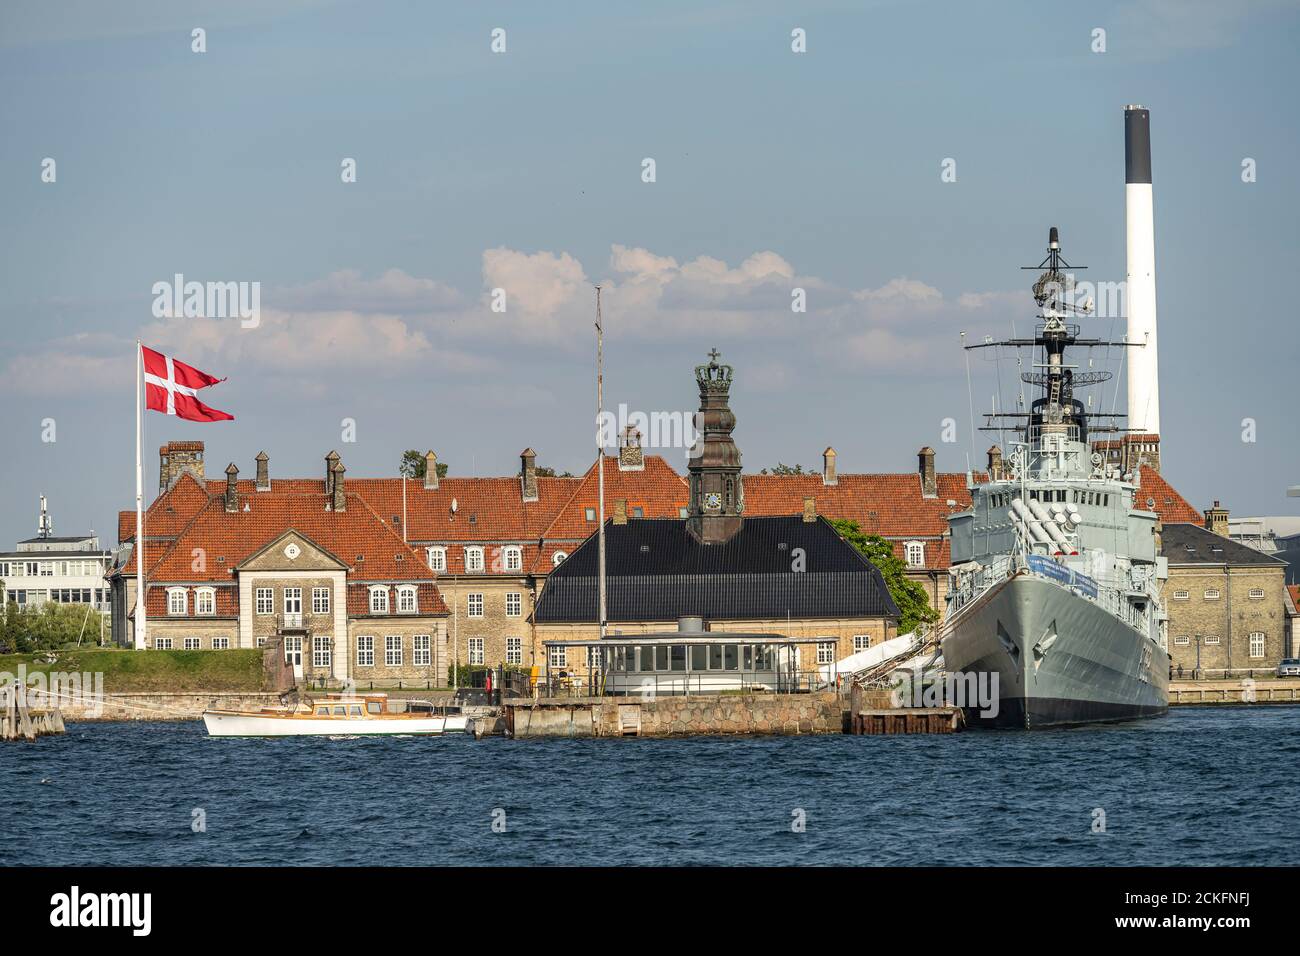 Marinestation und Marinehafen, Holmen, Kopenhagen, Dänemark, Europa | Naval base and harbour, Holmen, Copenhagen, Denmark, Europe Stock Photo